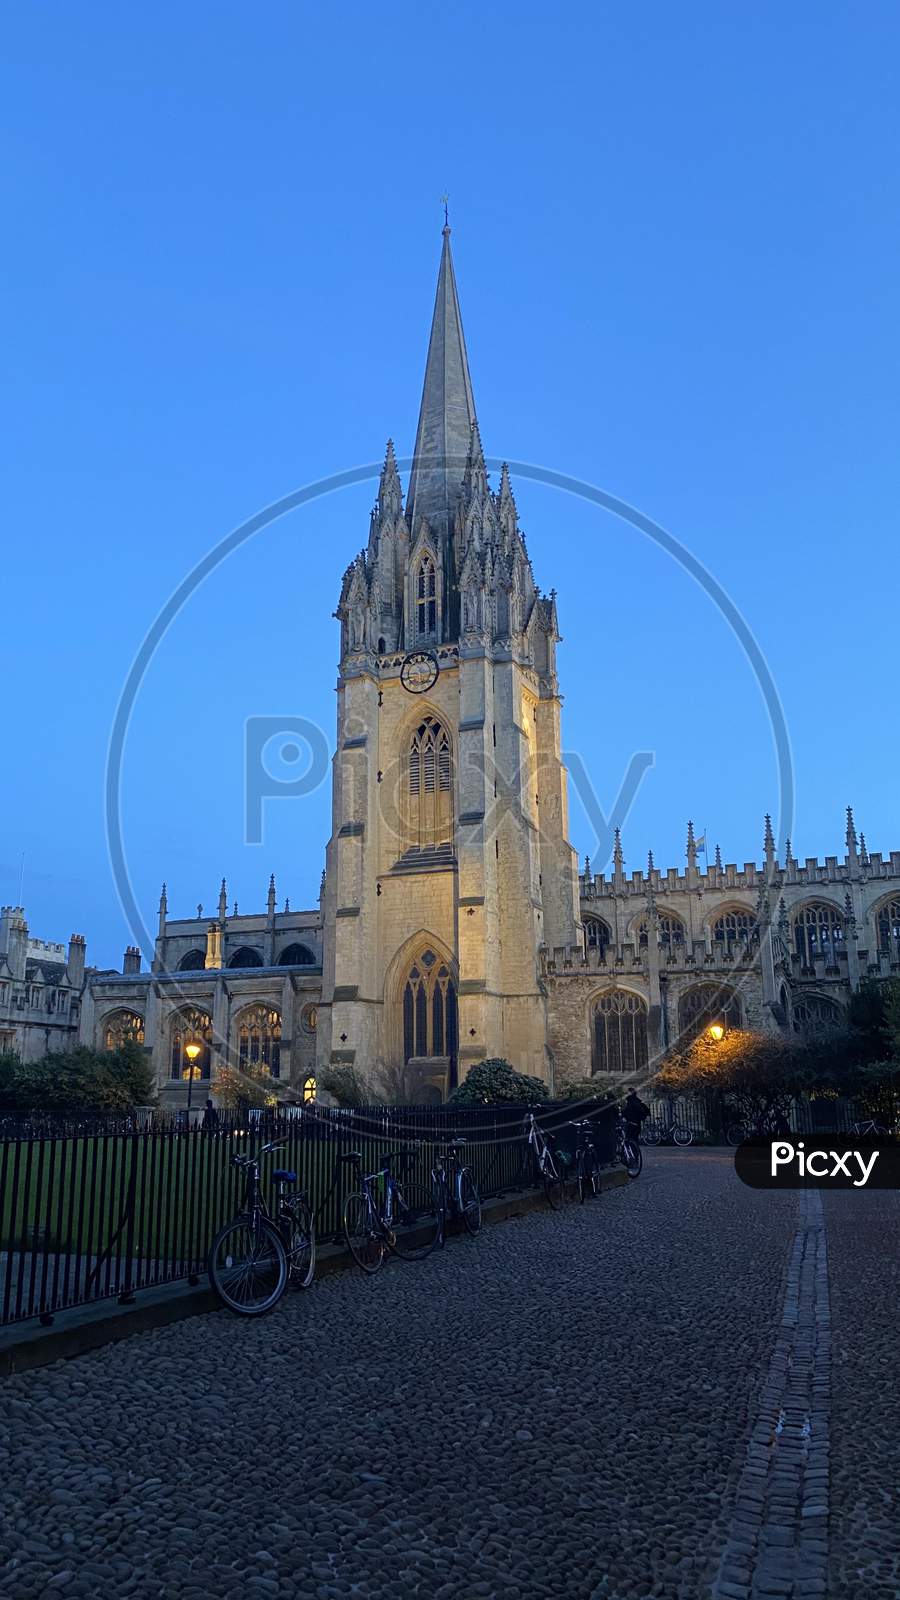 Beauty of Oxford City